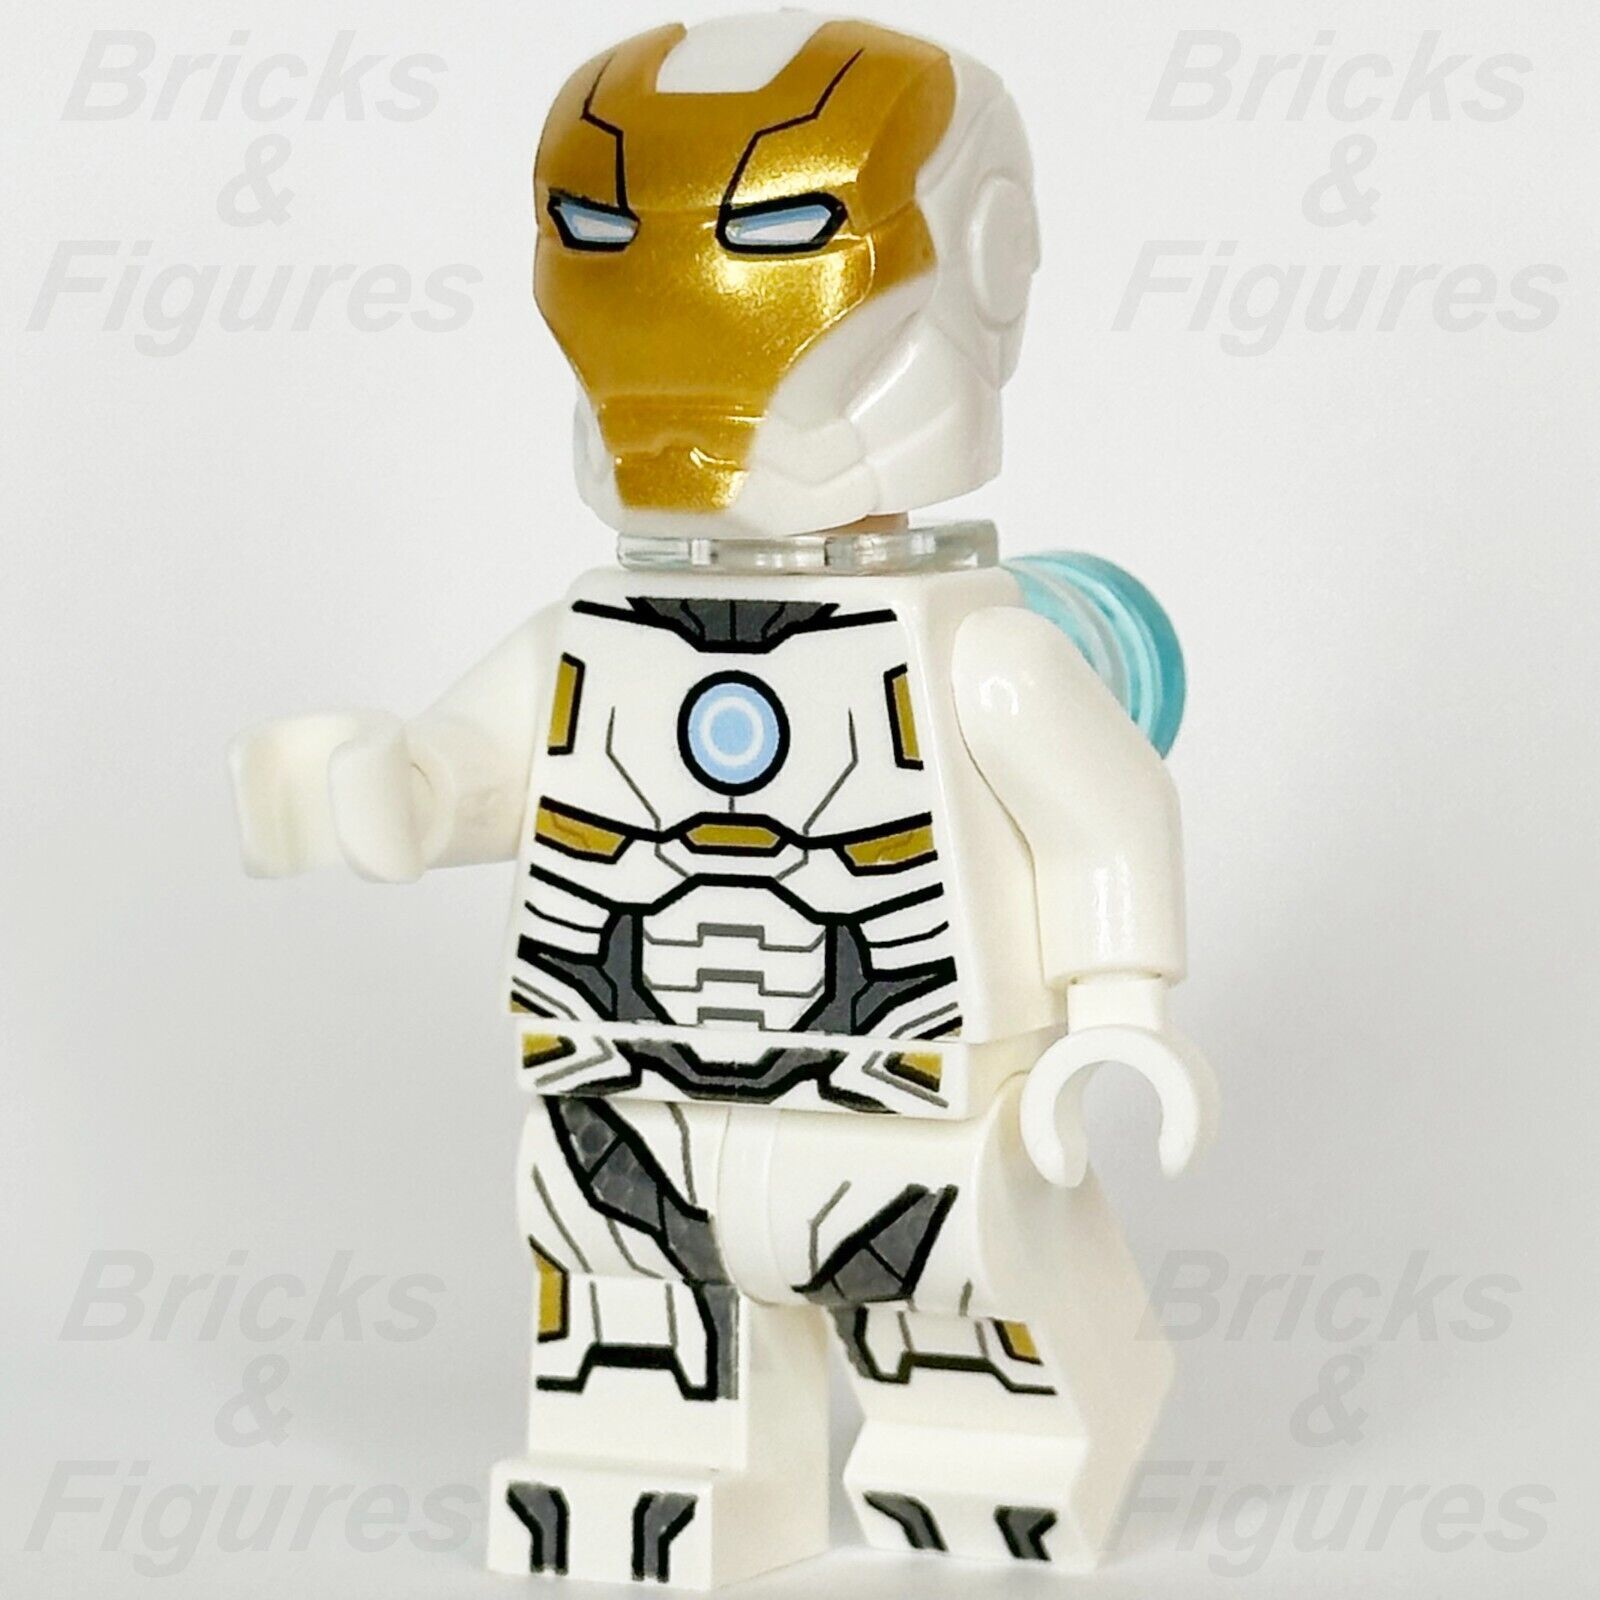 LEGO Super Heroes Space Iron Man Minifigure Avengers Mark 39 Suit 76049 sh229